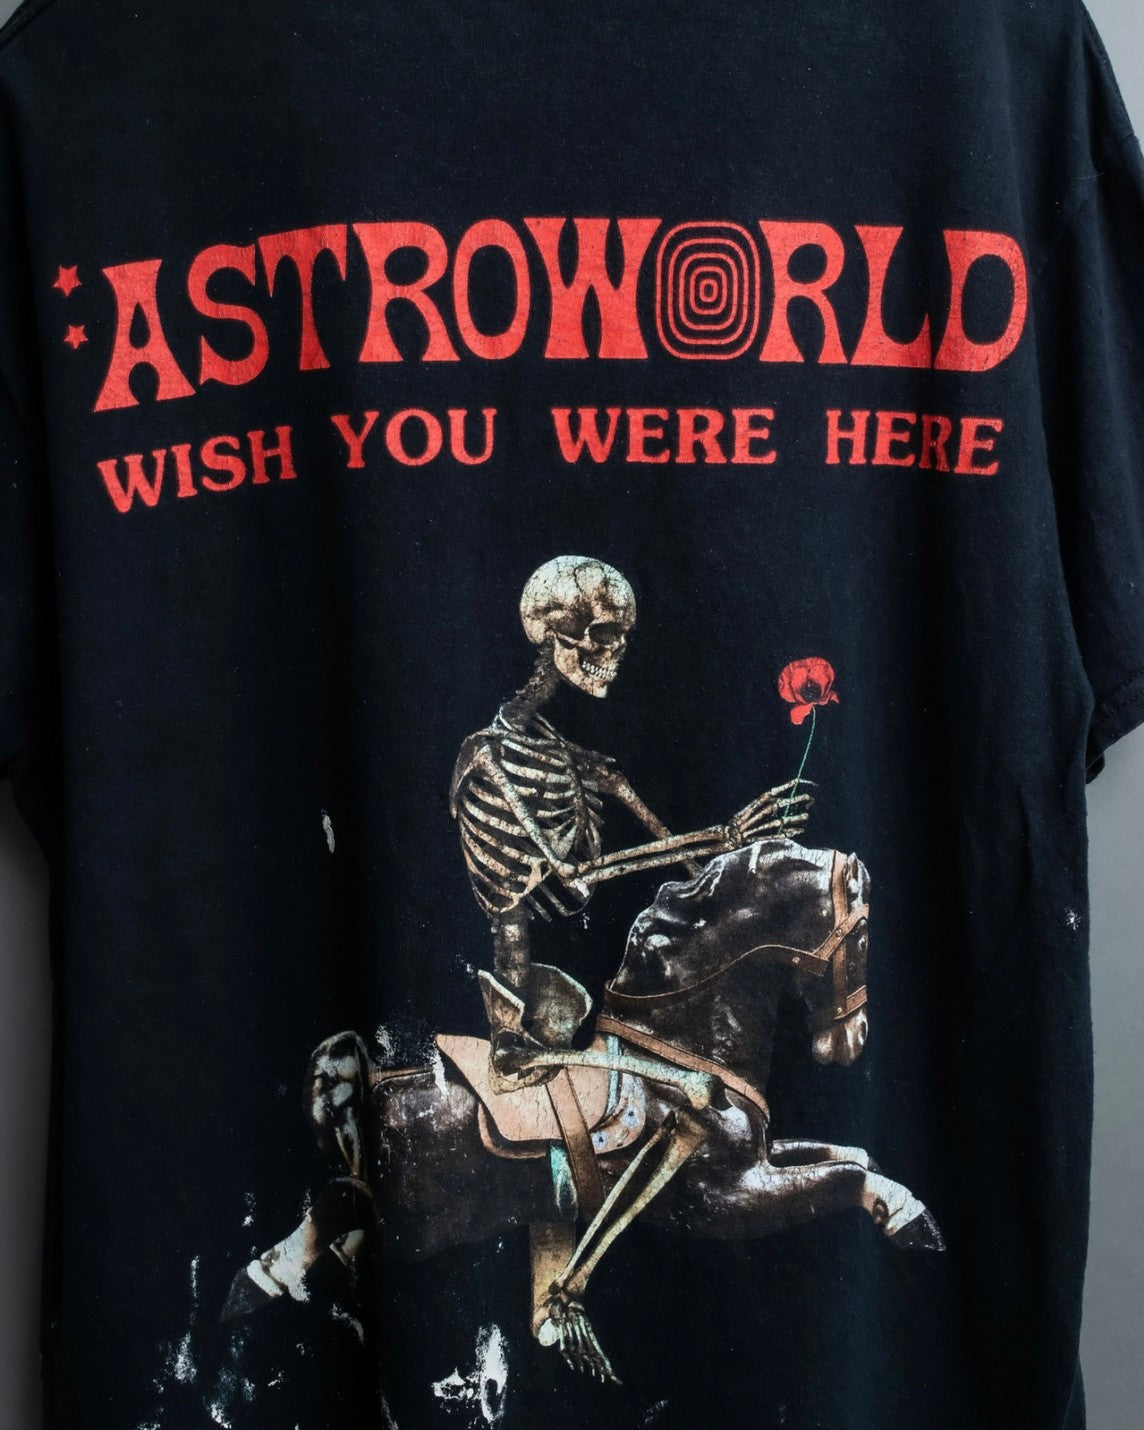 Custom Painted "ASTROWORLD" T-Shirts